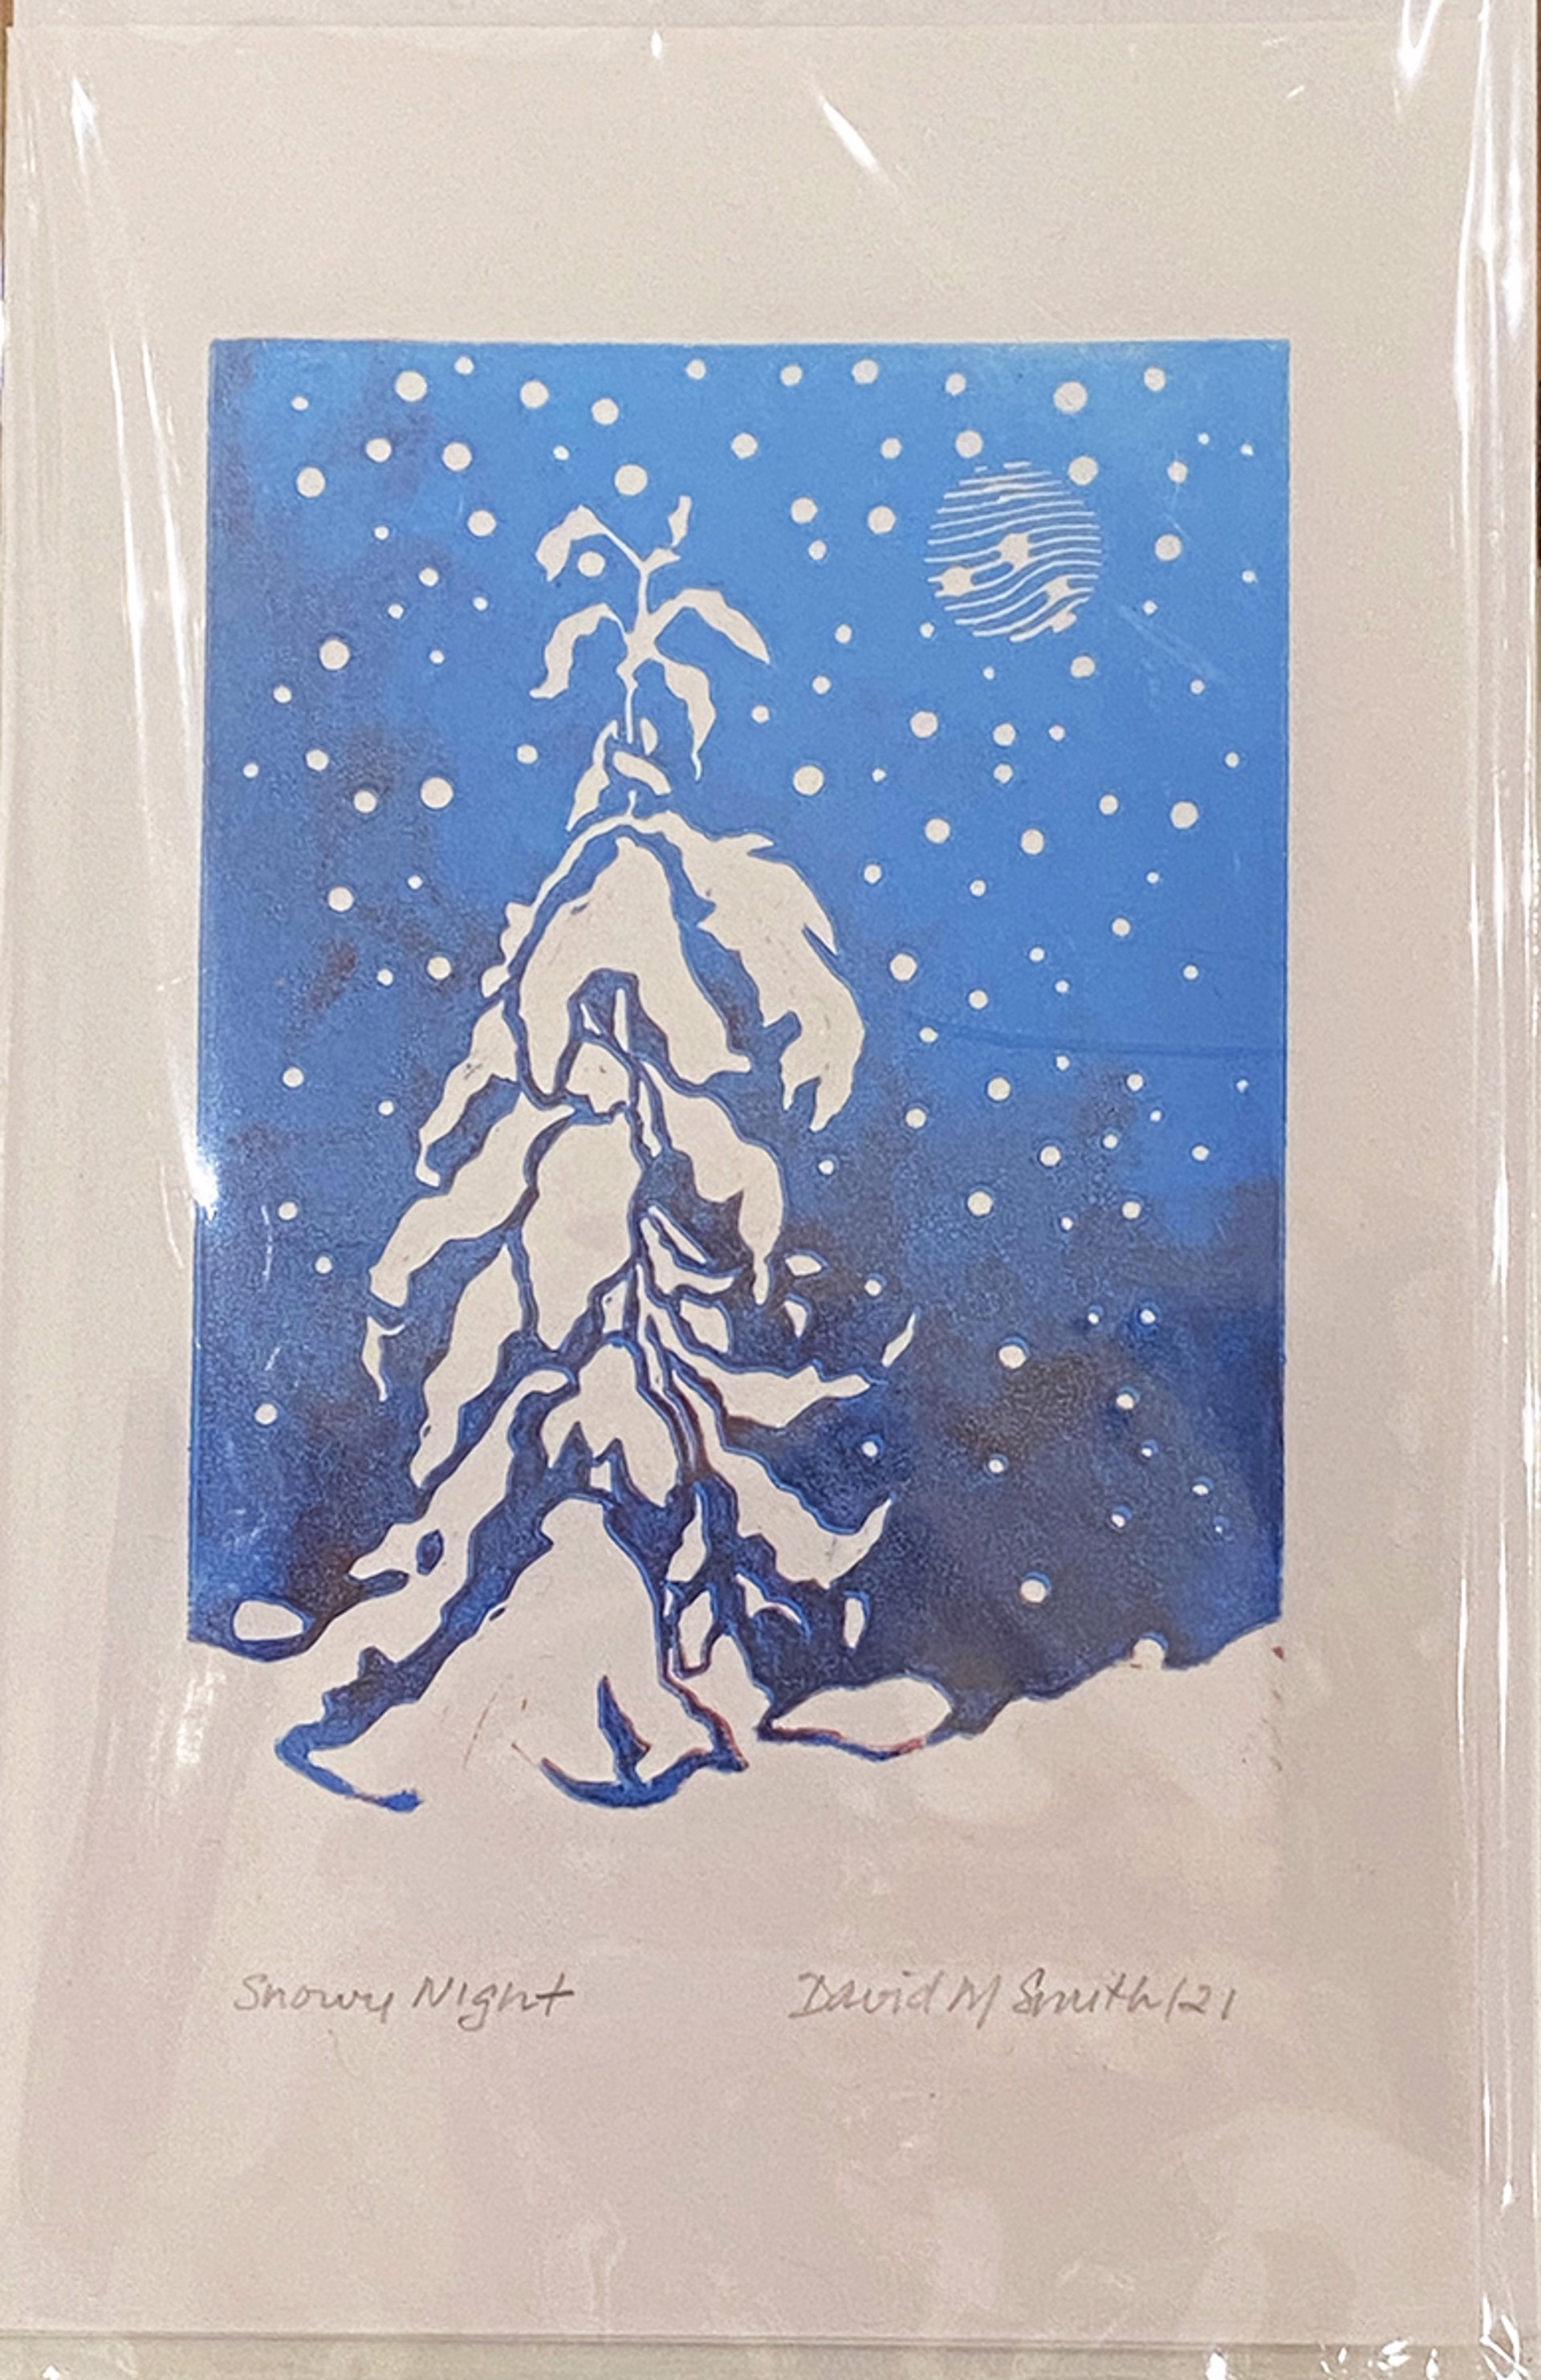 Snowy Night (card) by David M. Smith